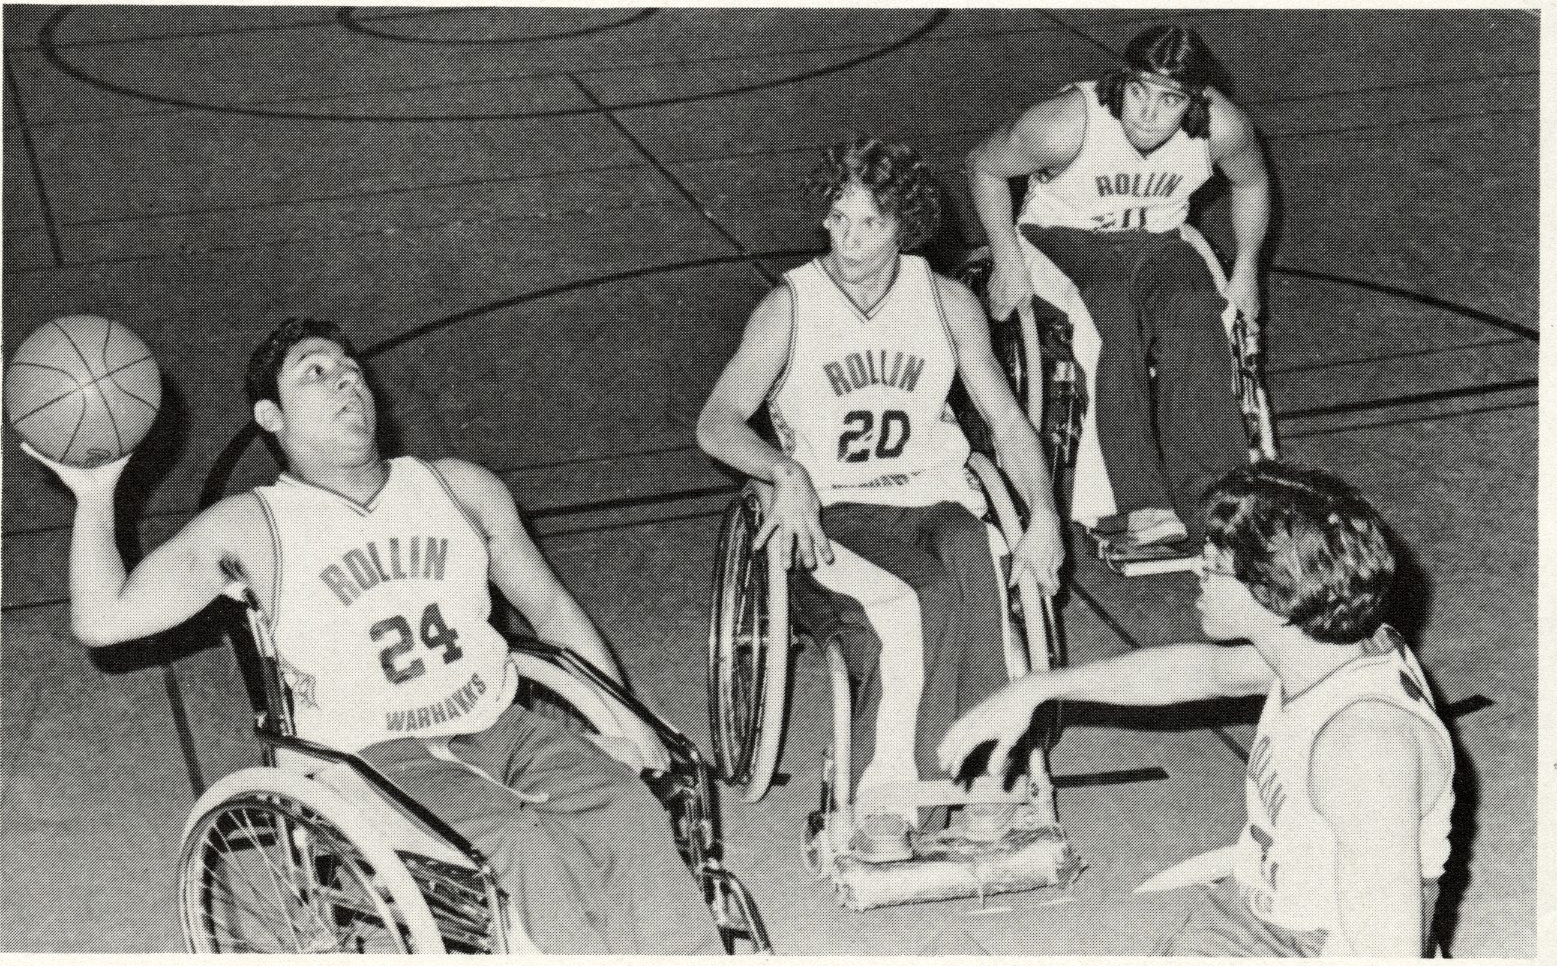 1982 Wheelchair Basketball Team playing